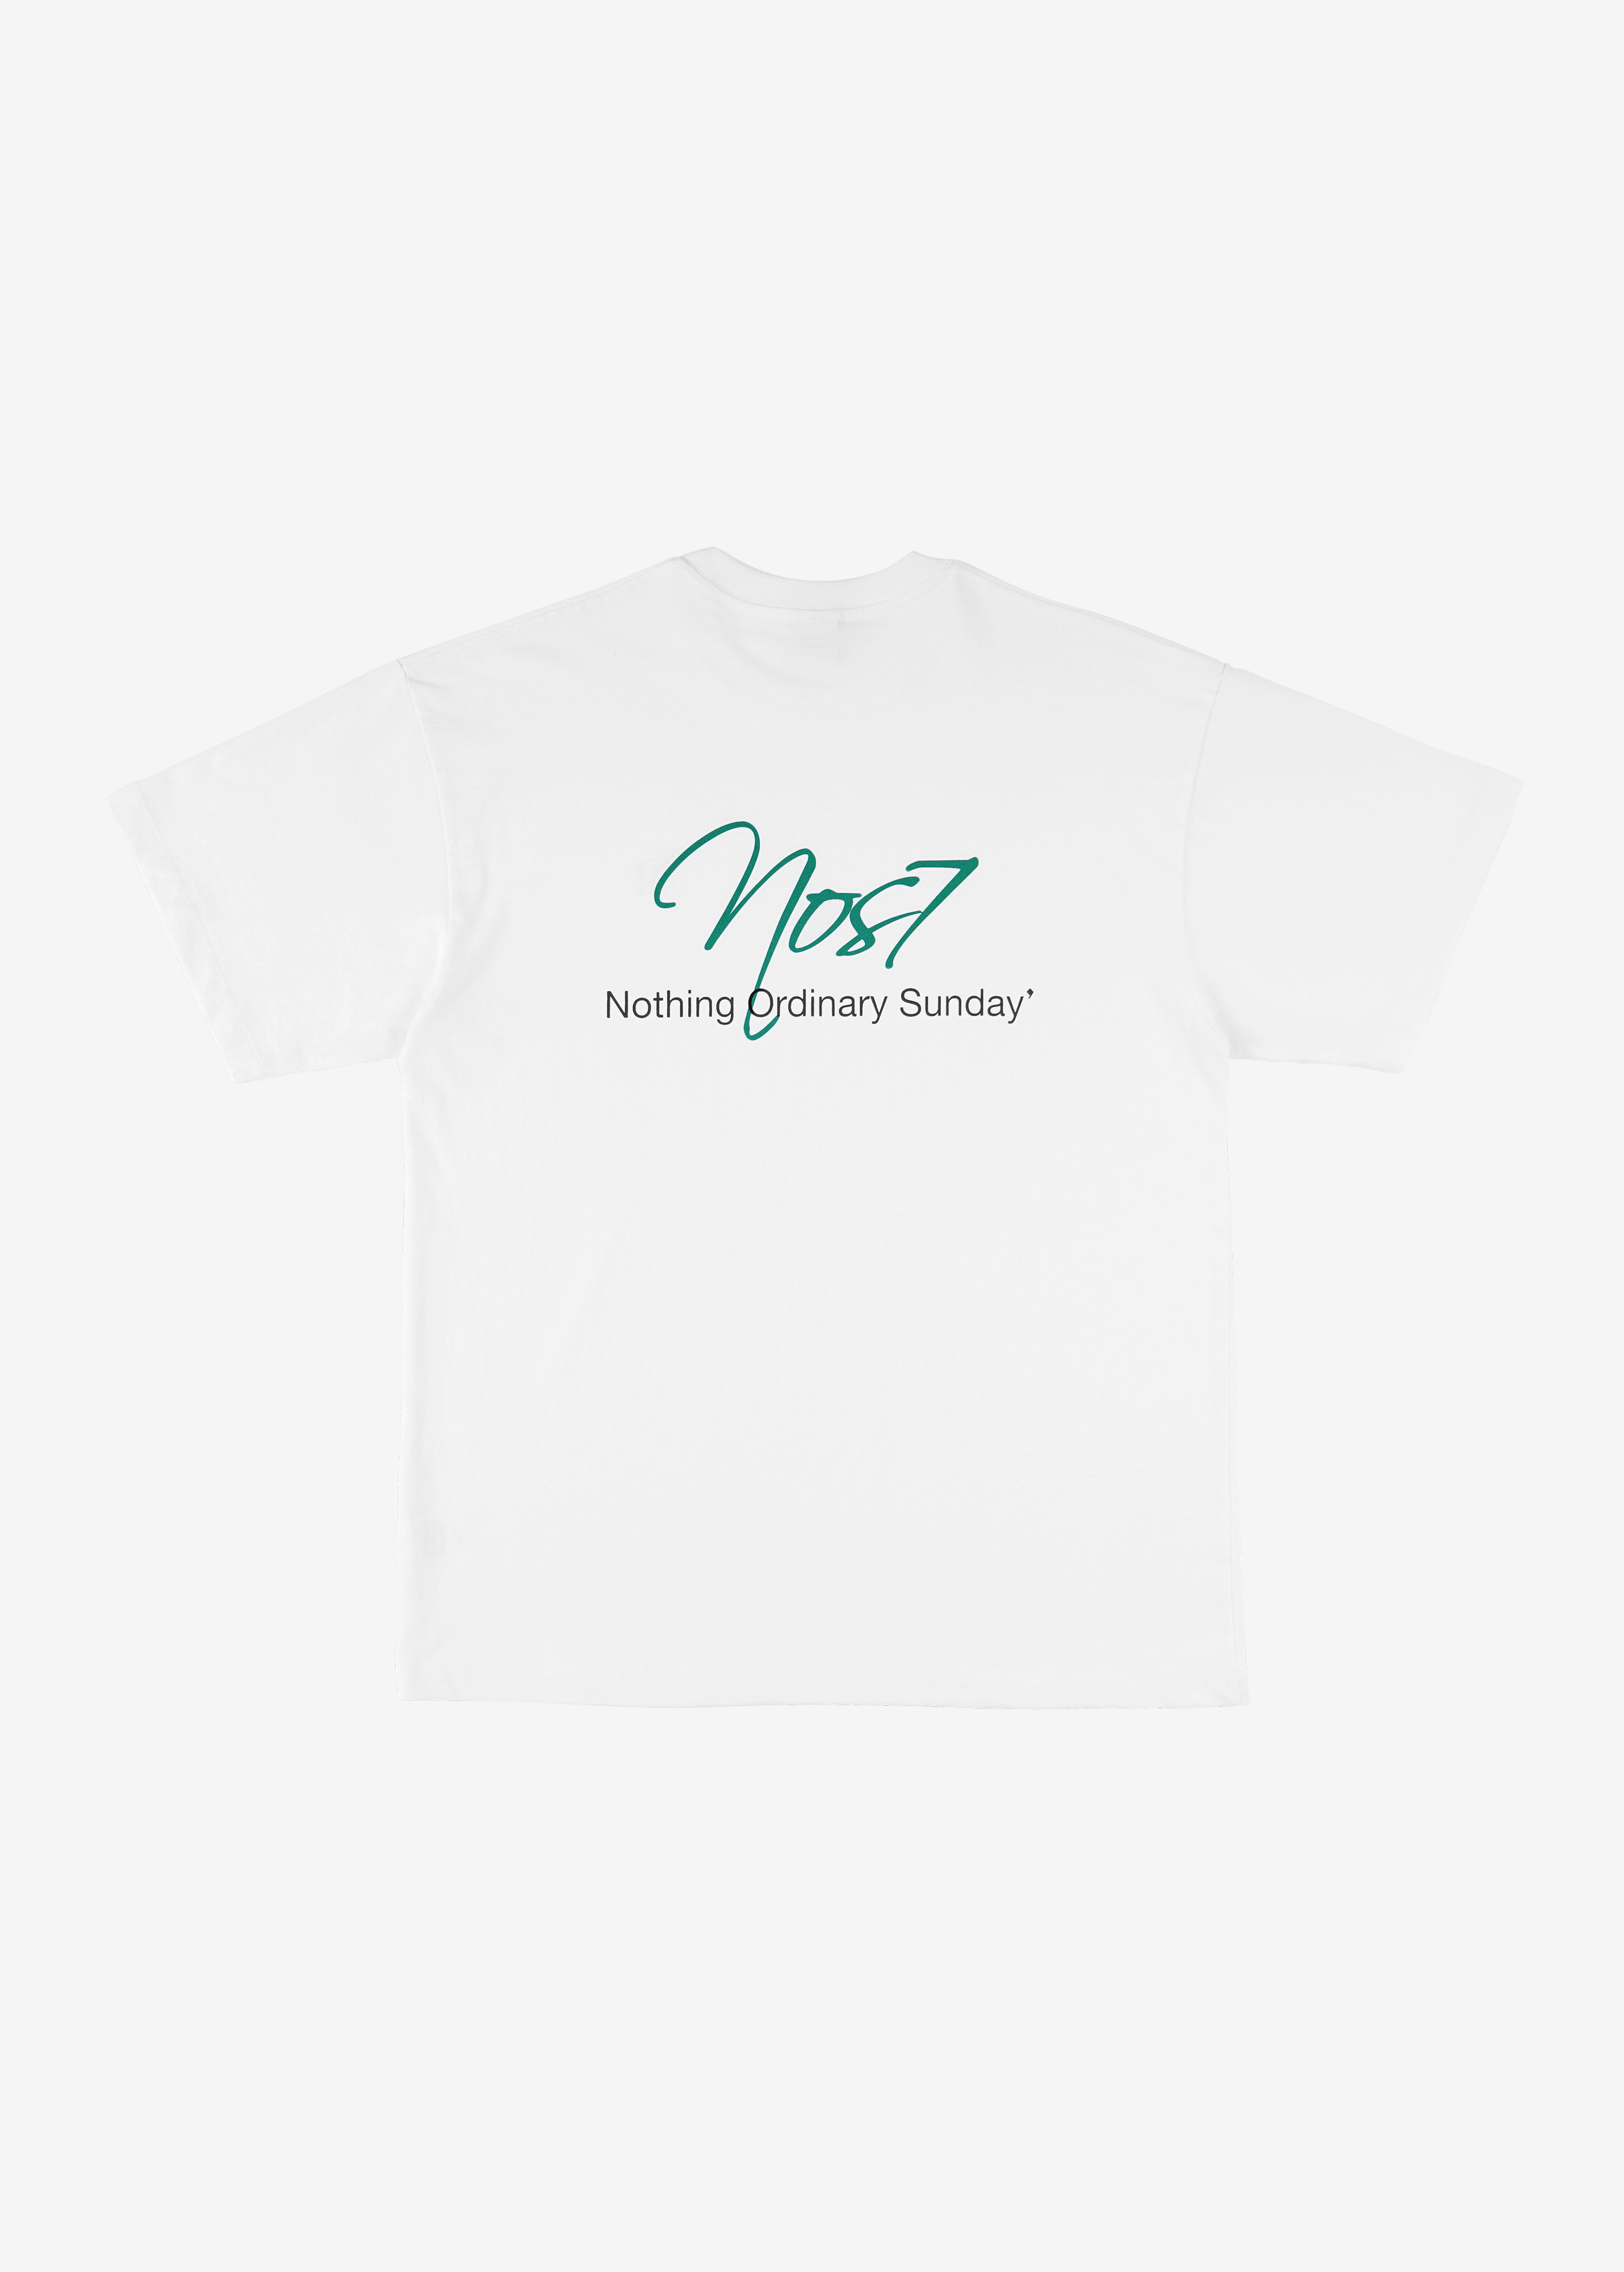 NOS7 핸드라이팅 티셔츠 - 화이트/그린